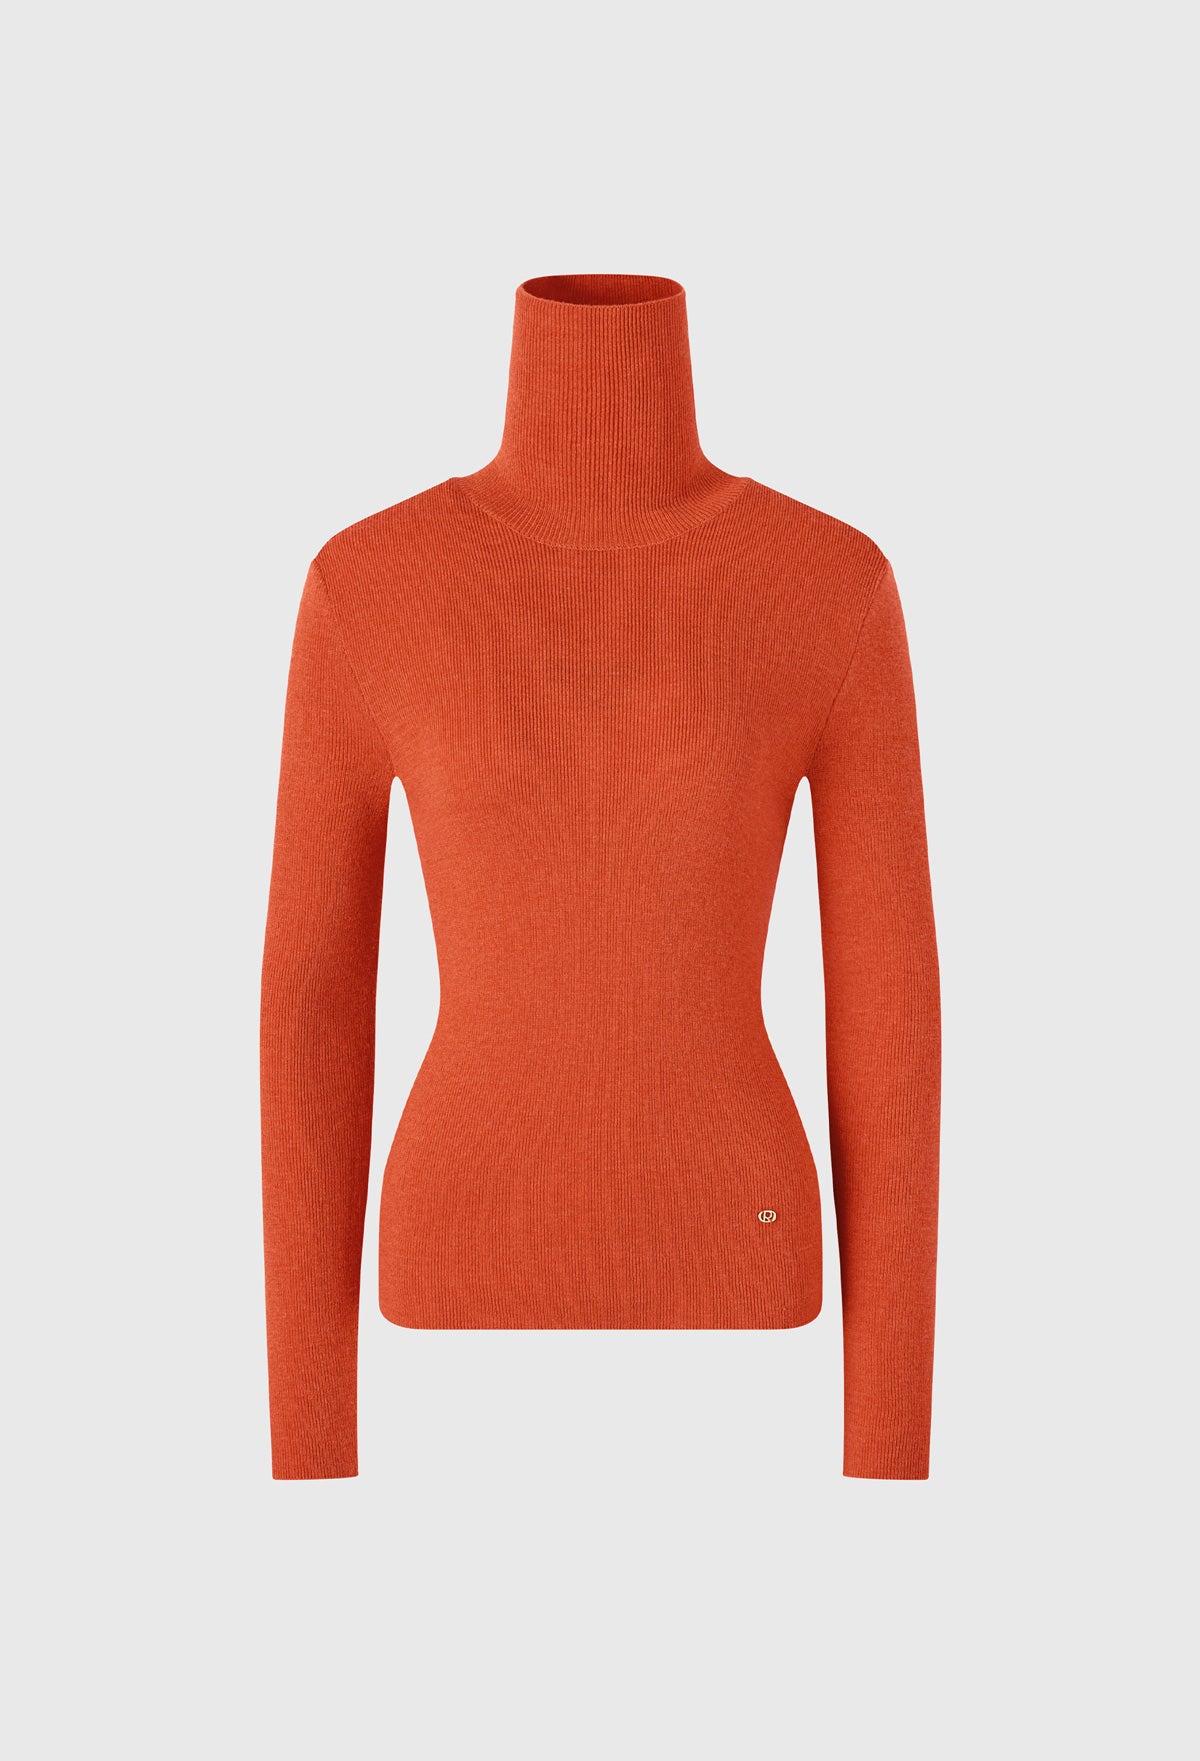 Essential 混橙色羊毛高領針織上衣